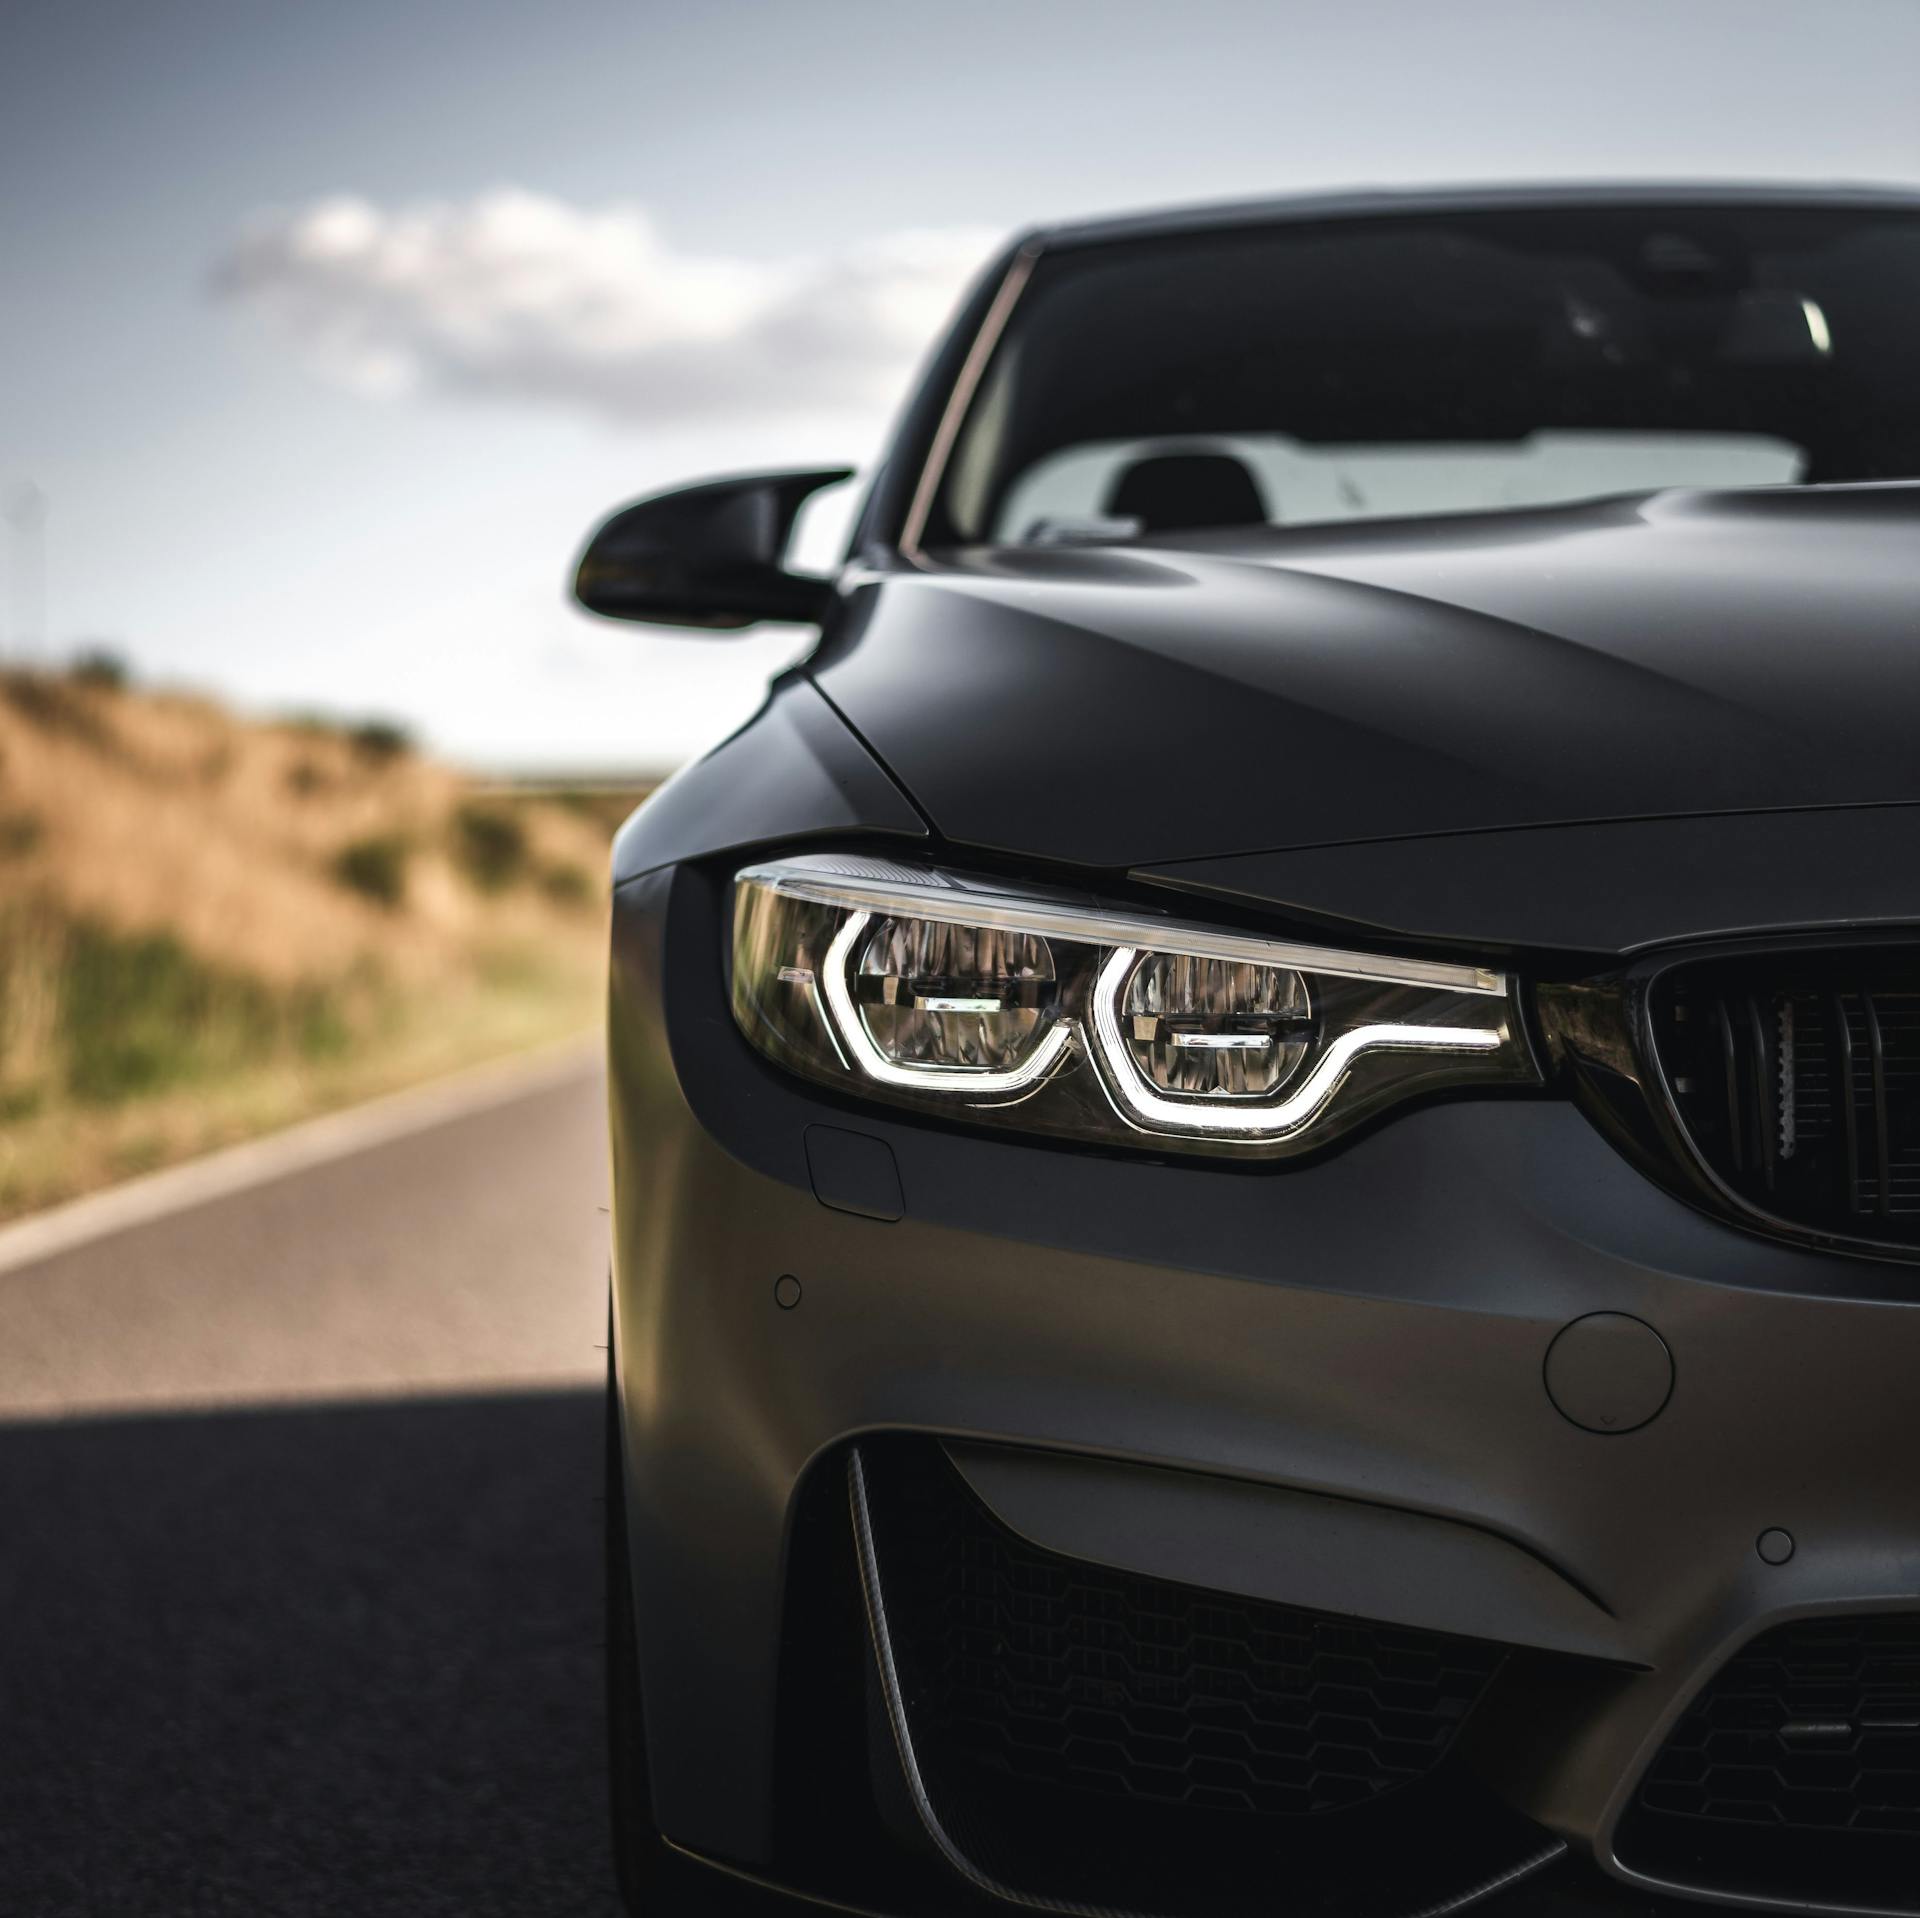 Fronten på en av de senaste modellerna av BMW